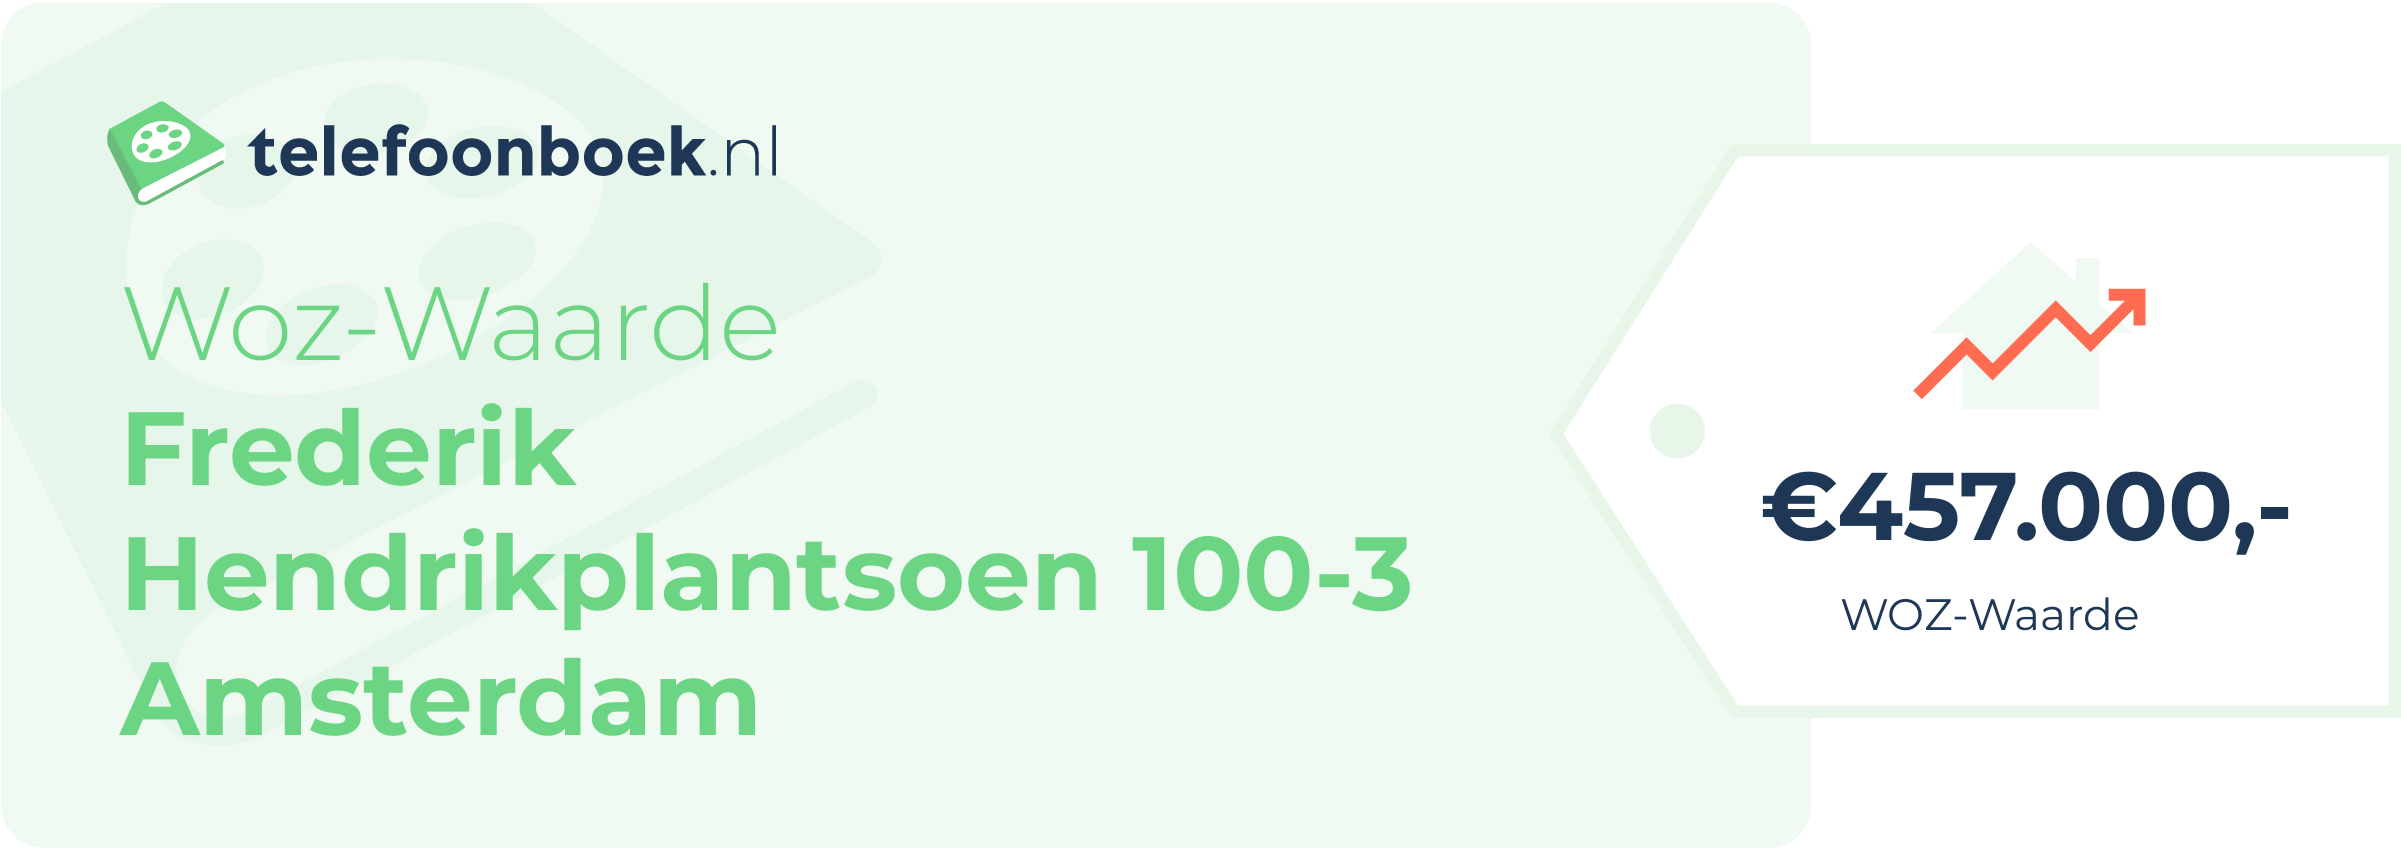 WOZ-waarde Frederik Hendrikplantsoen 100-3 Amsterdam